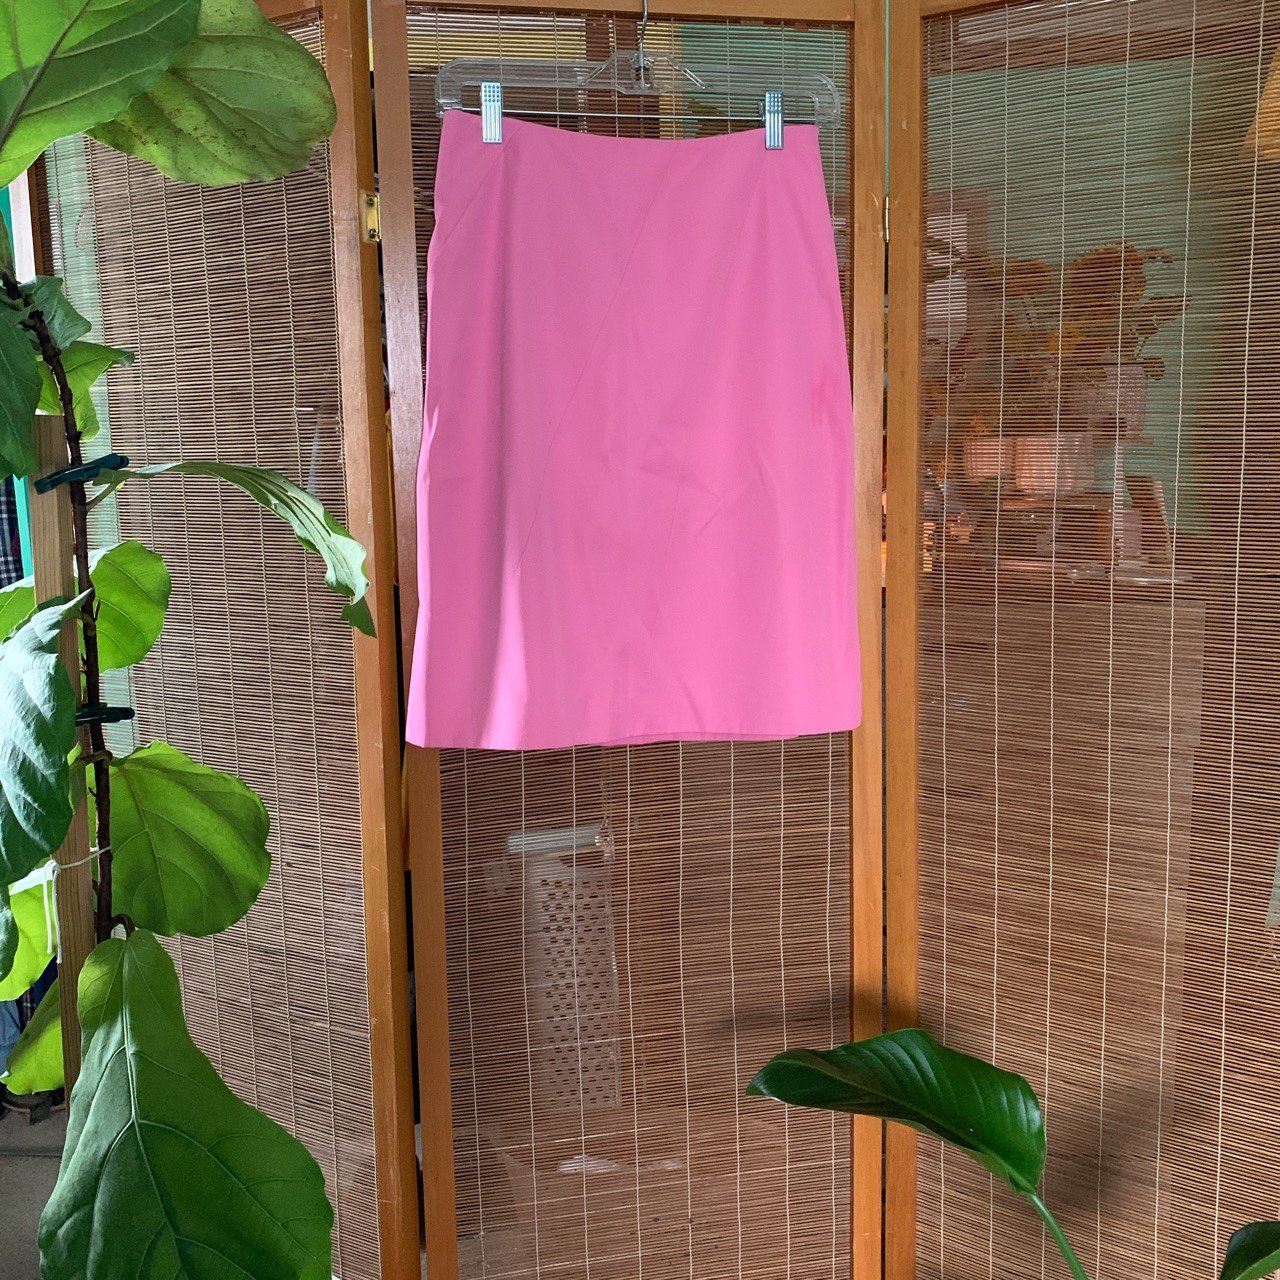 Authentic BCBG Maxazria pink skirt size 2. gtSK5oSaL Ze